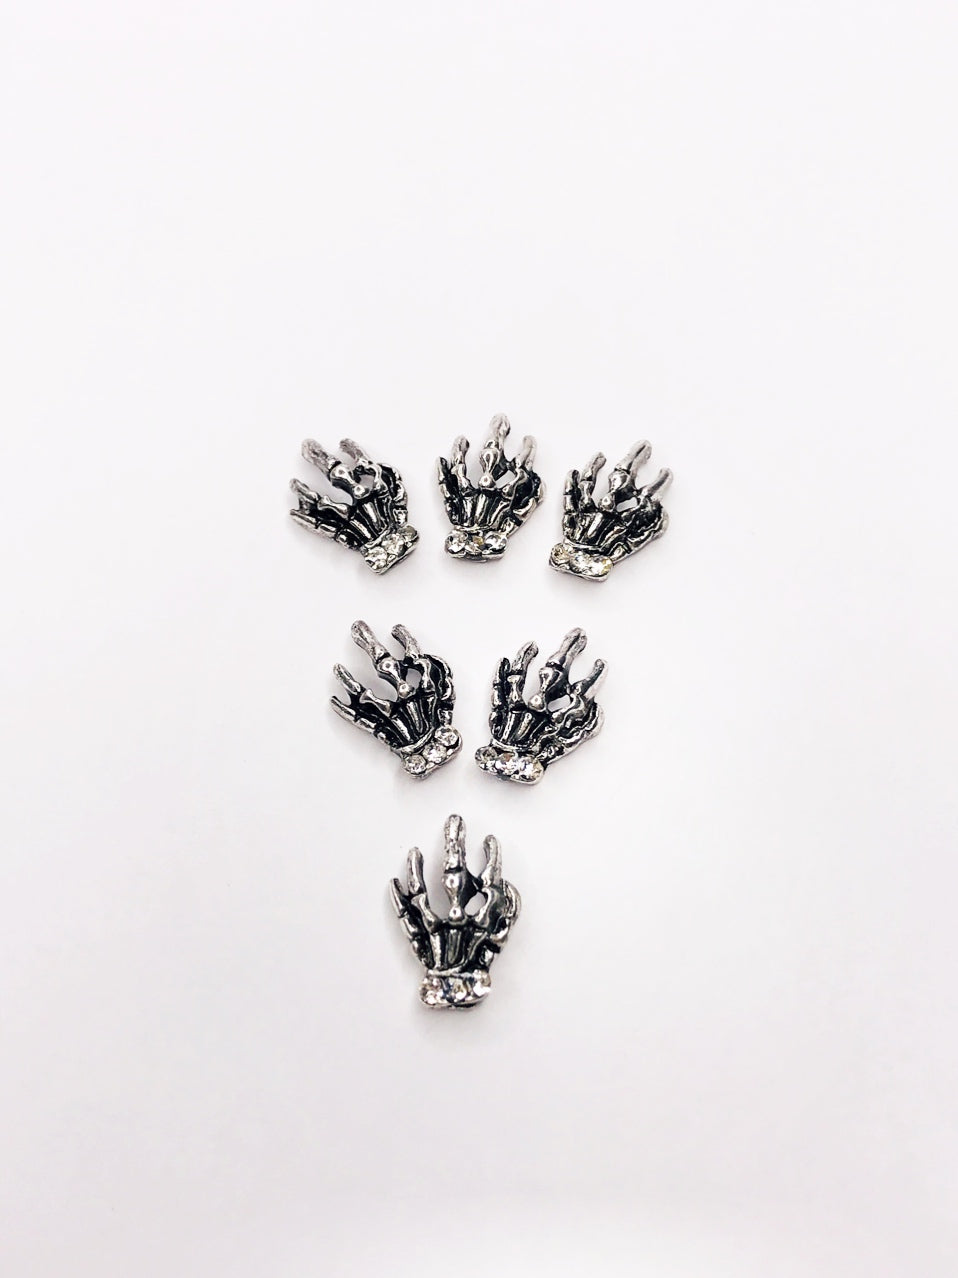 SHINE Metal Alloy Charms -"Skeleton Hands" Vintage Silver